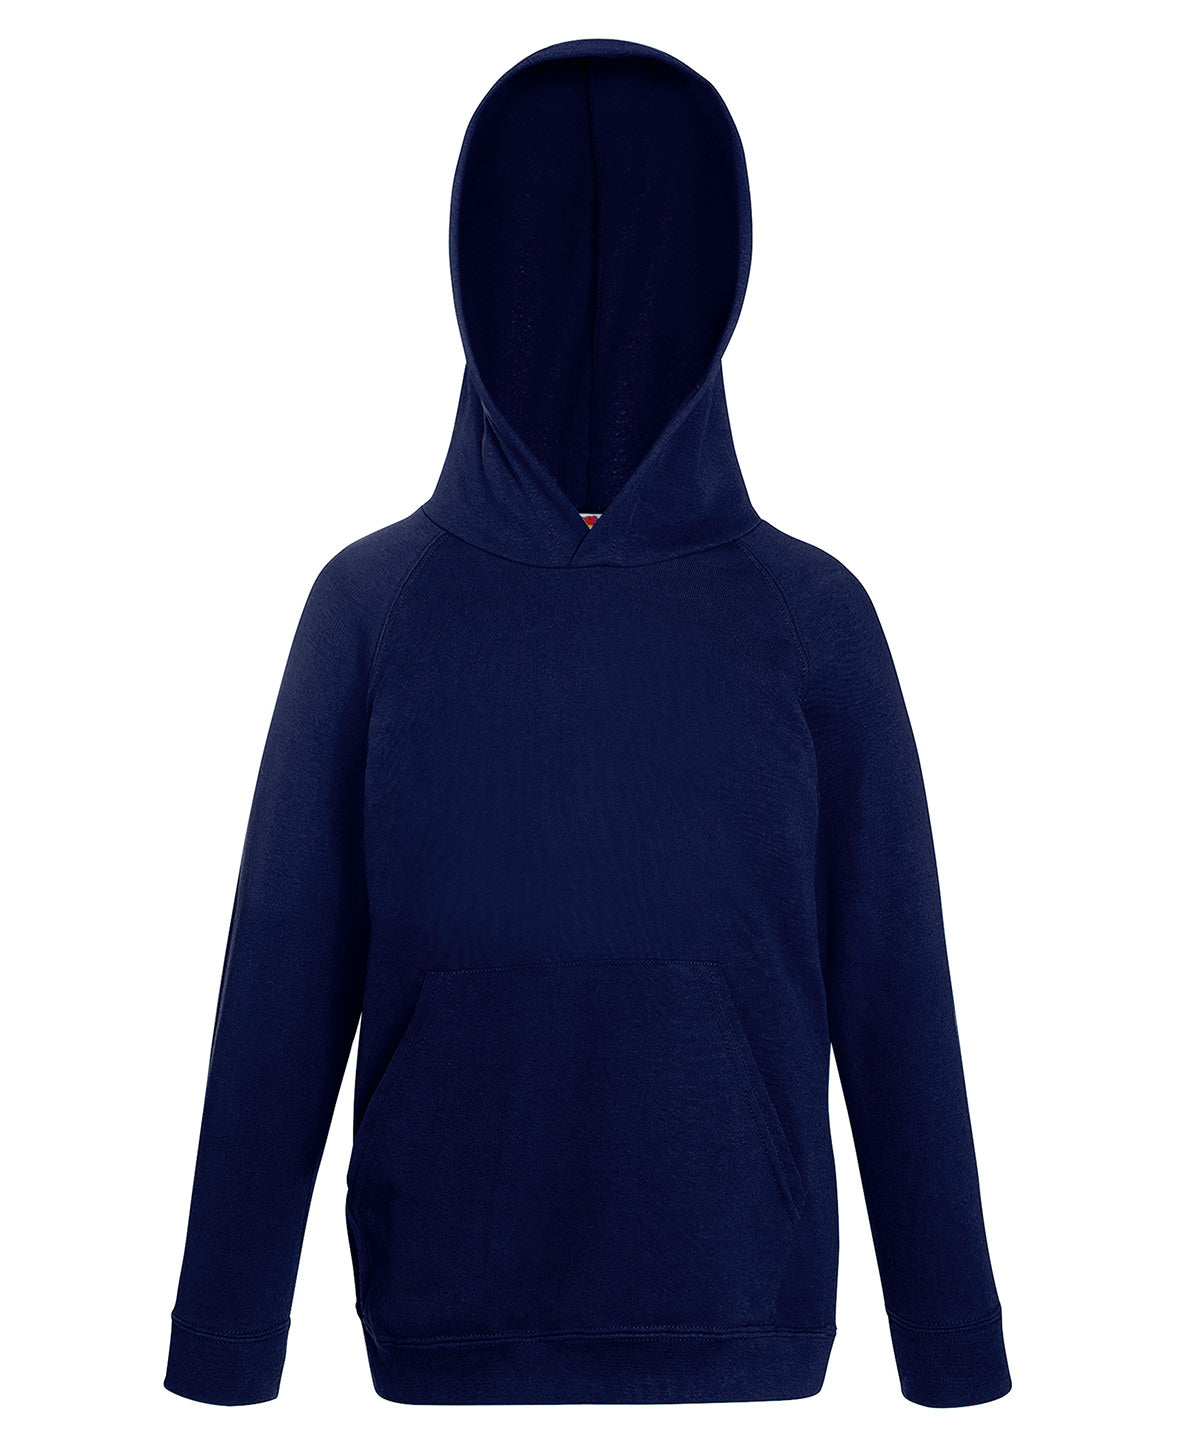 Hettupeysur - Kids Lightweight Hooded Sweatshirt